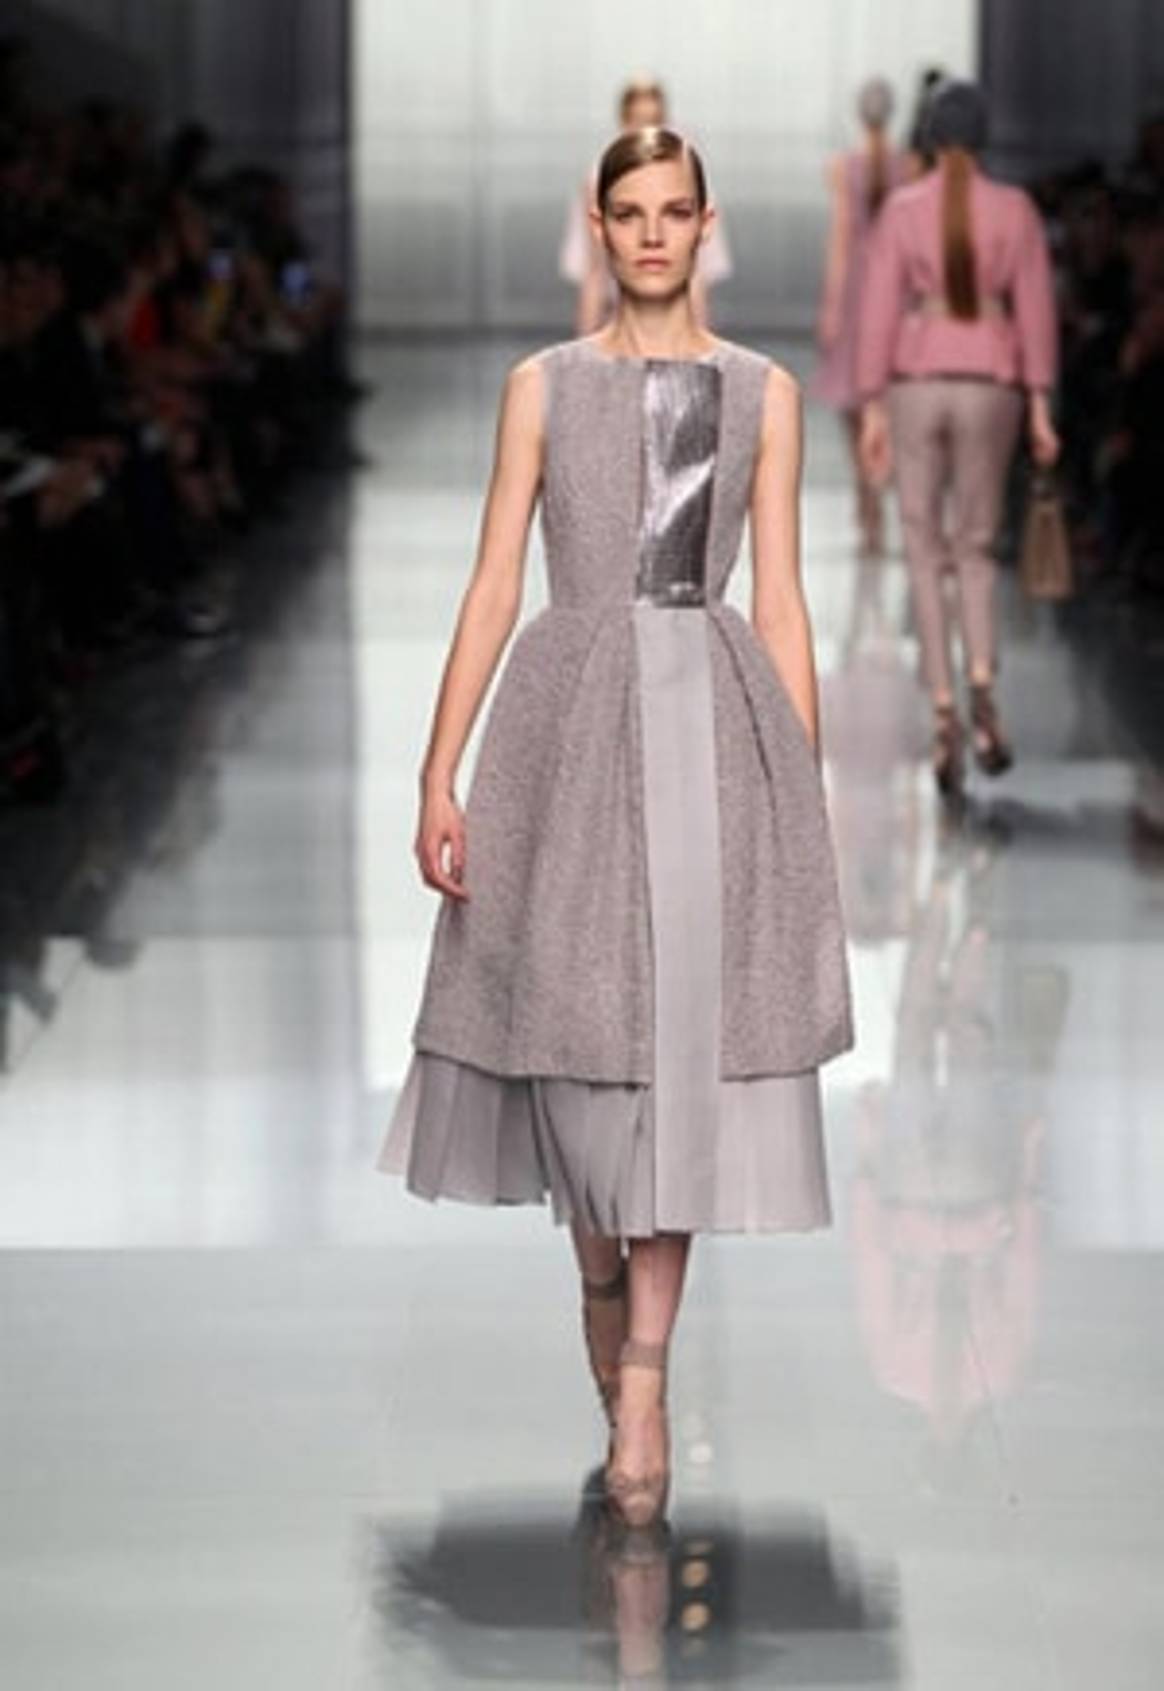 Dior: Raf Simons folgt auf Galliano